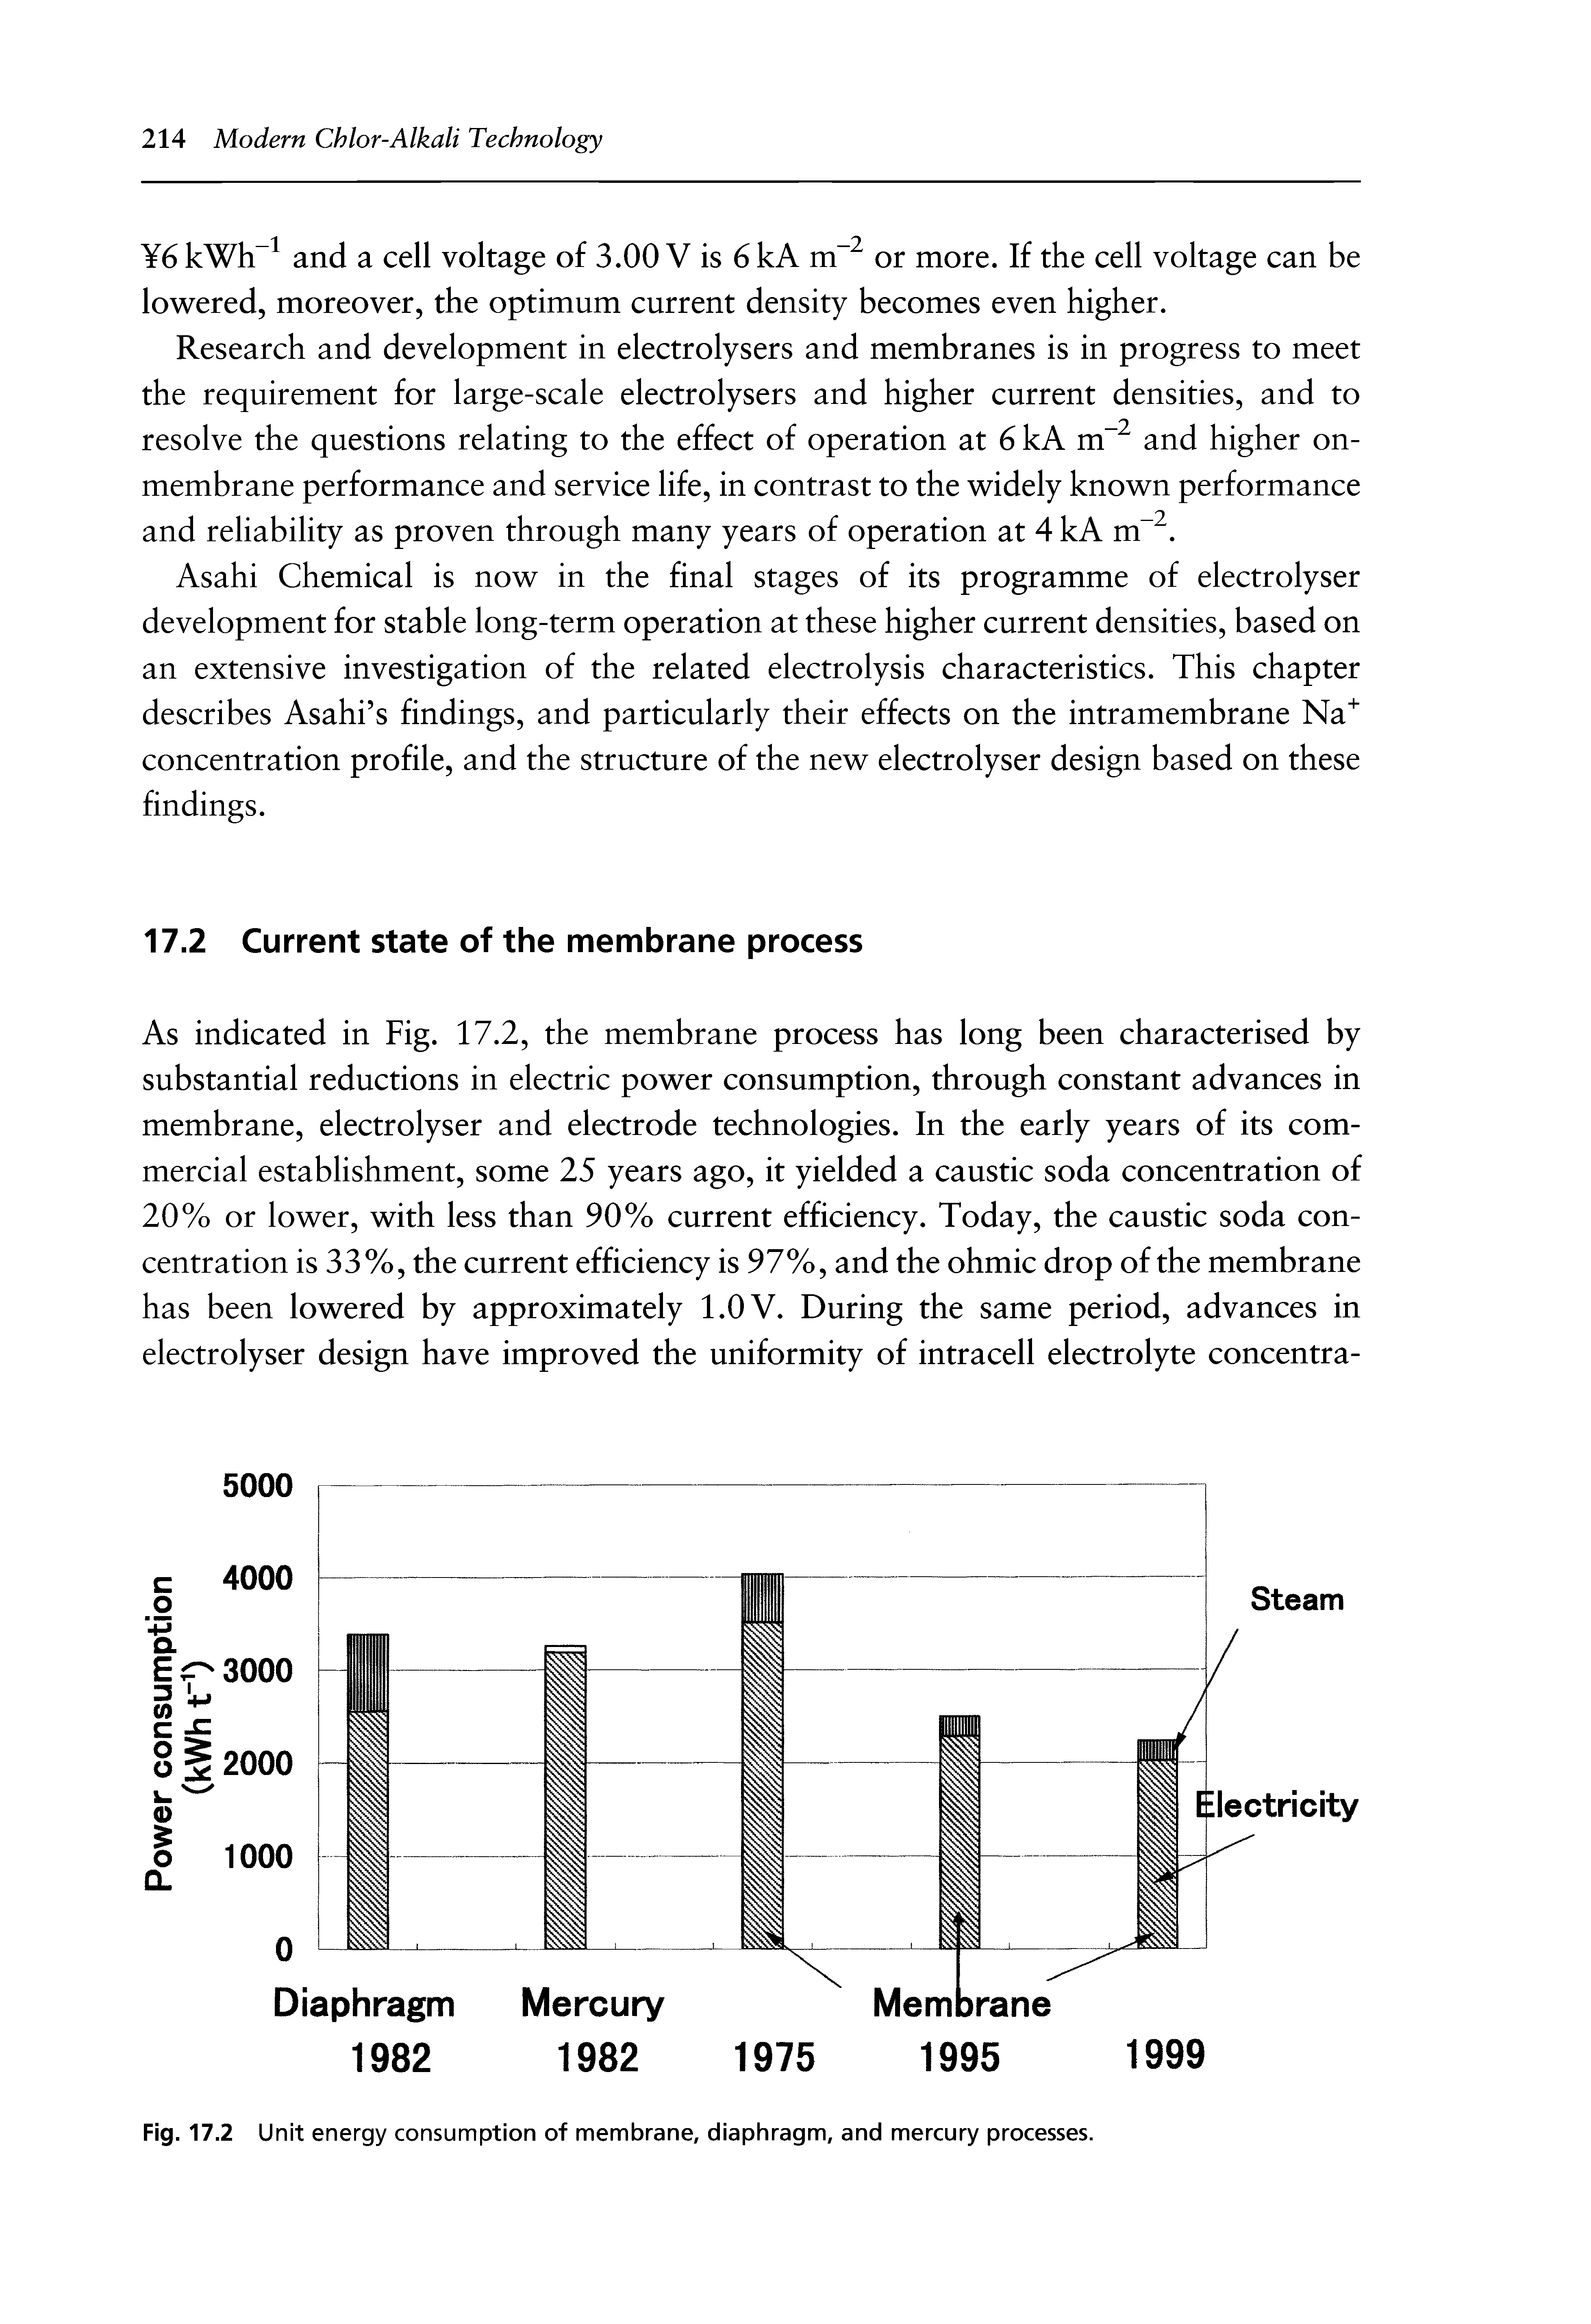 Fig. 17.2 Unit energy consumption of membrane, diaphragm, and mercury processes.